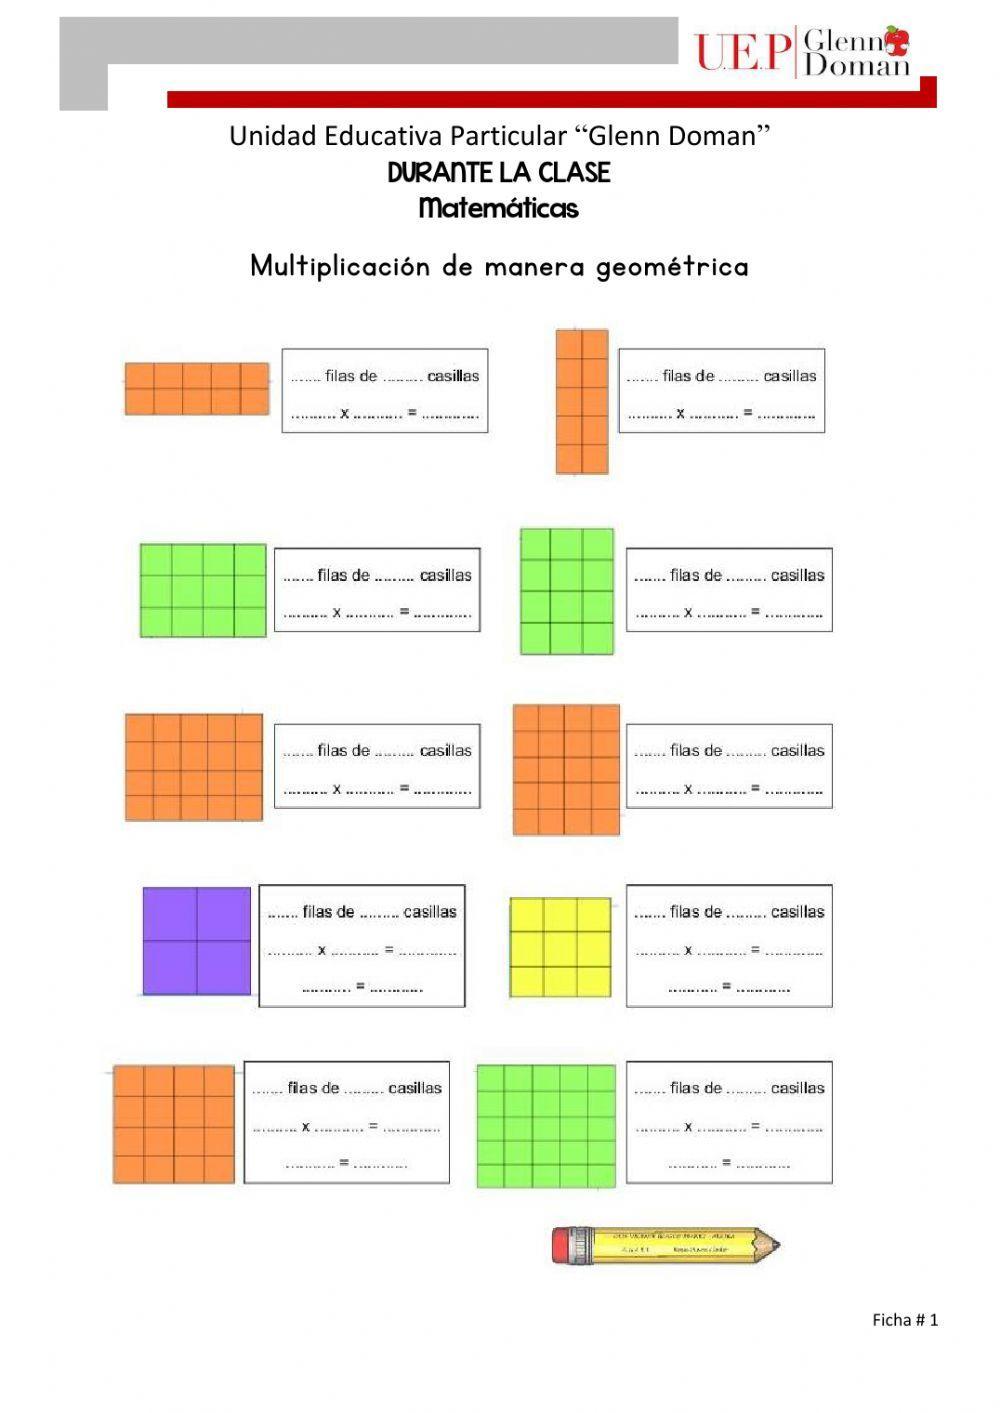 Multiplicacion modelo geometrico